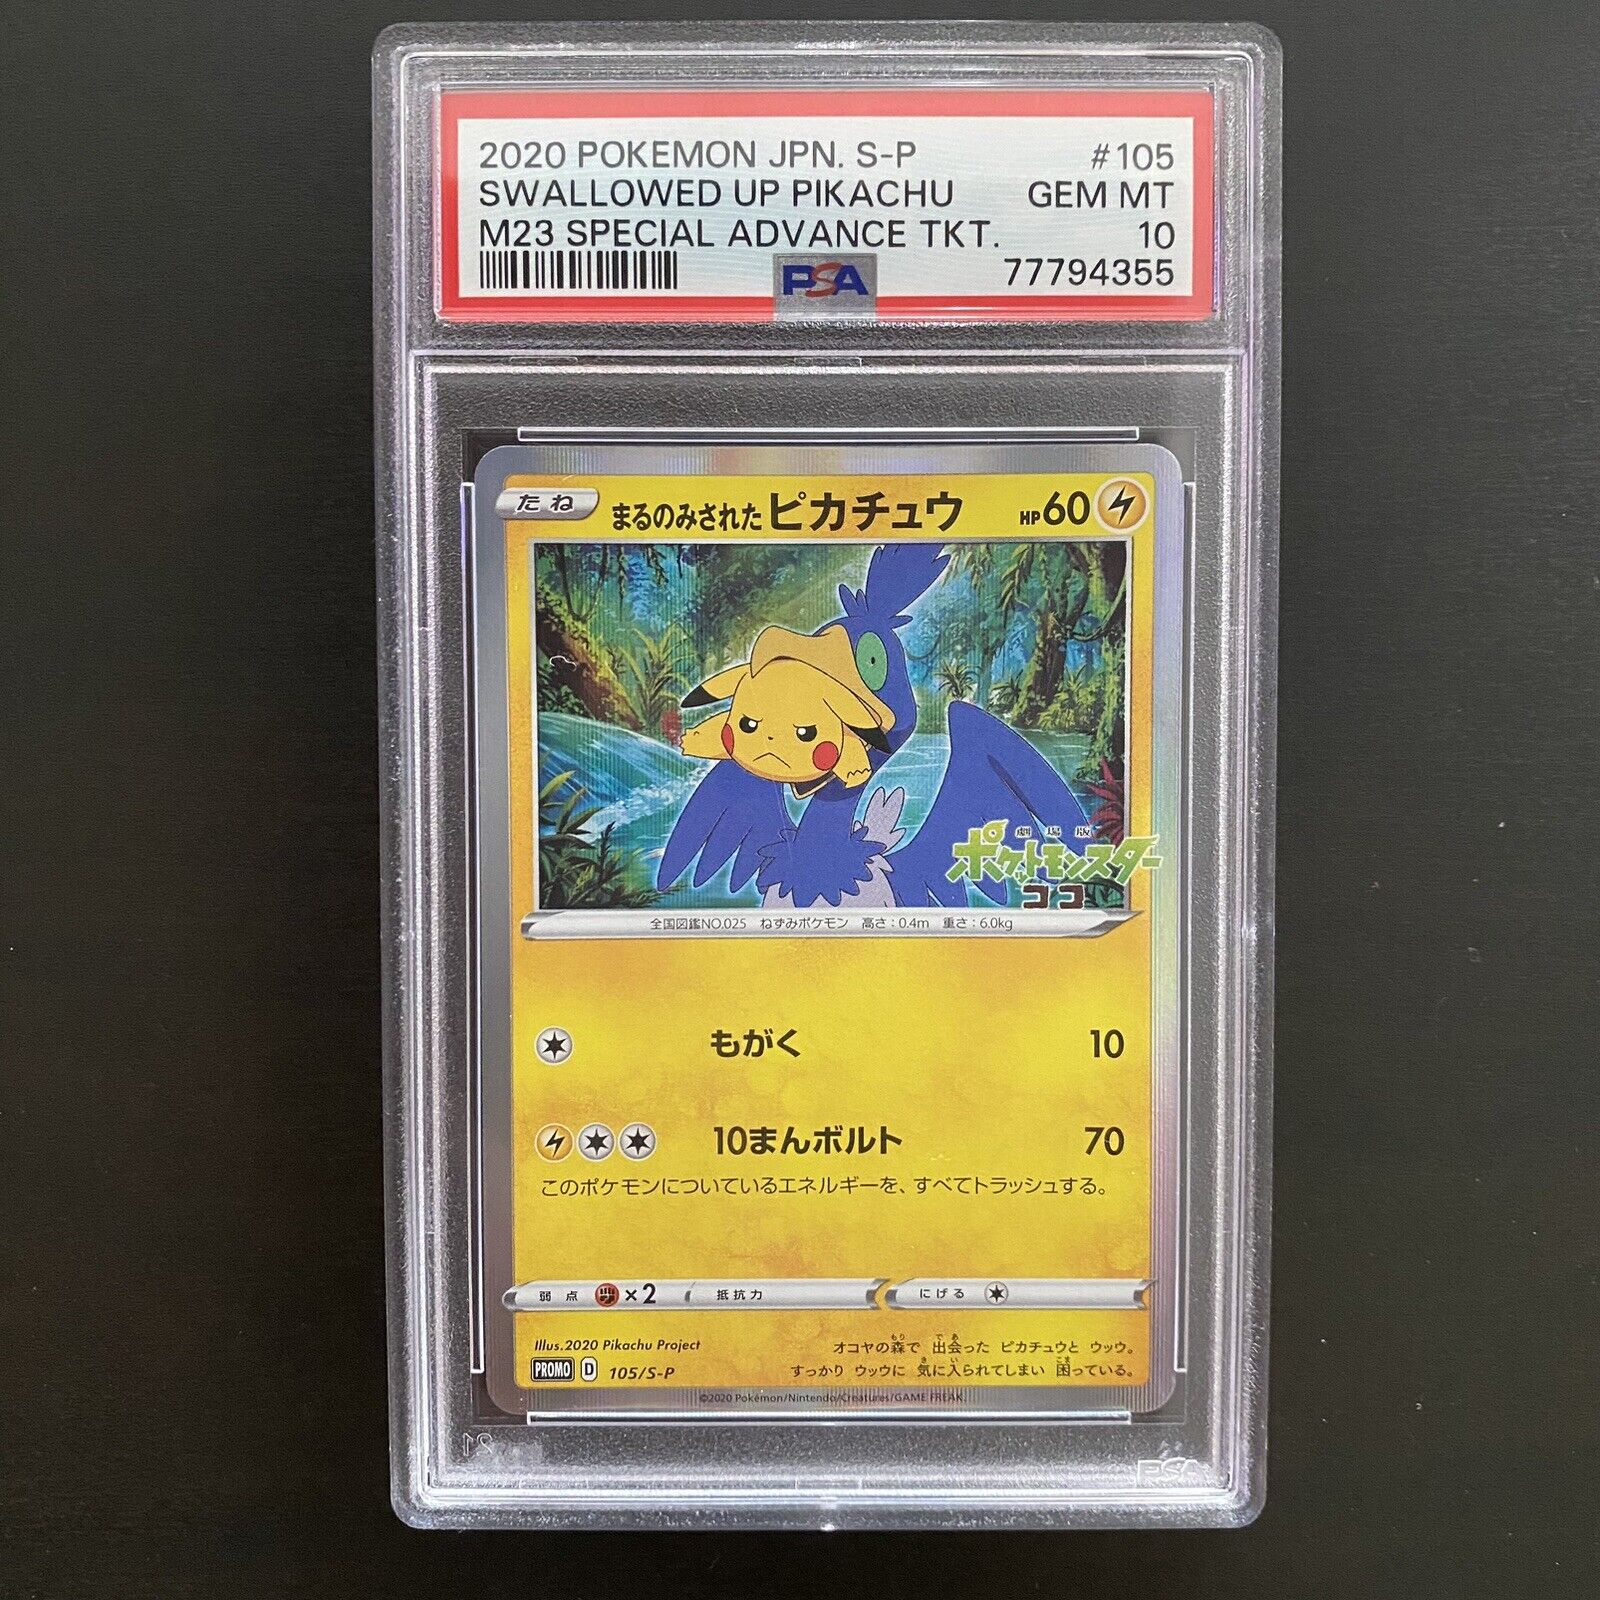 SWALLOWED PIKACHU 105/S-P | PSA 10 | Promo Japanese Graded Pokémon Card